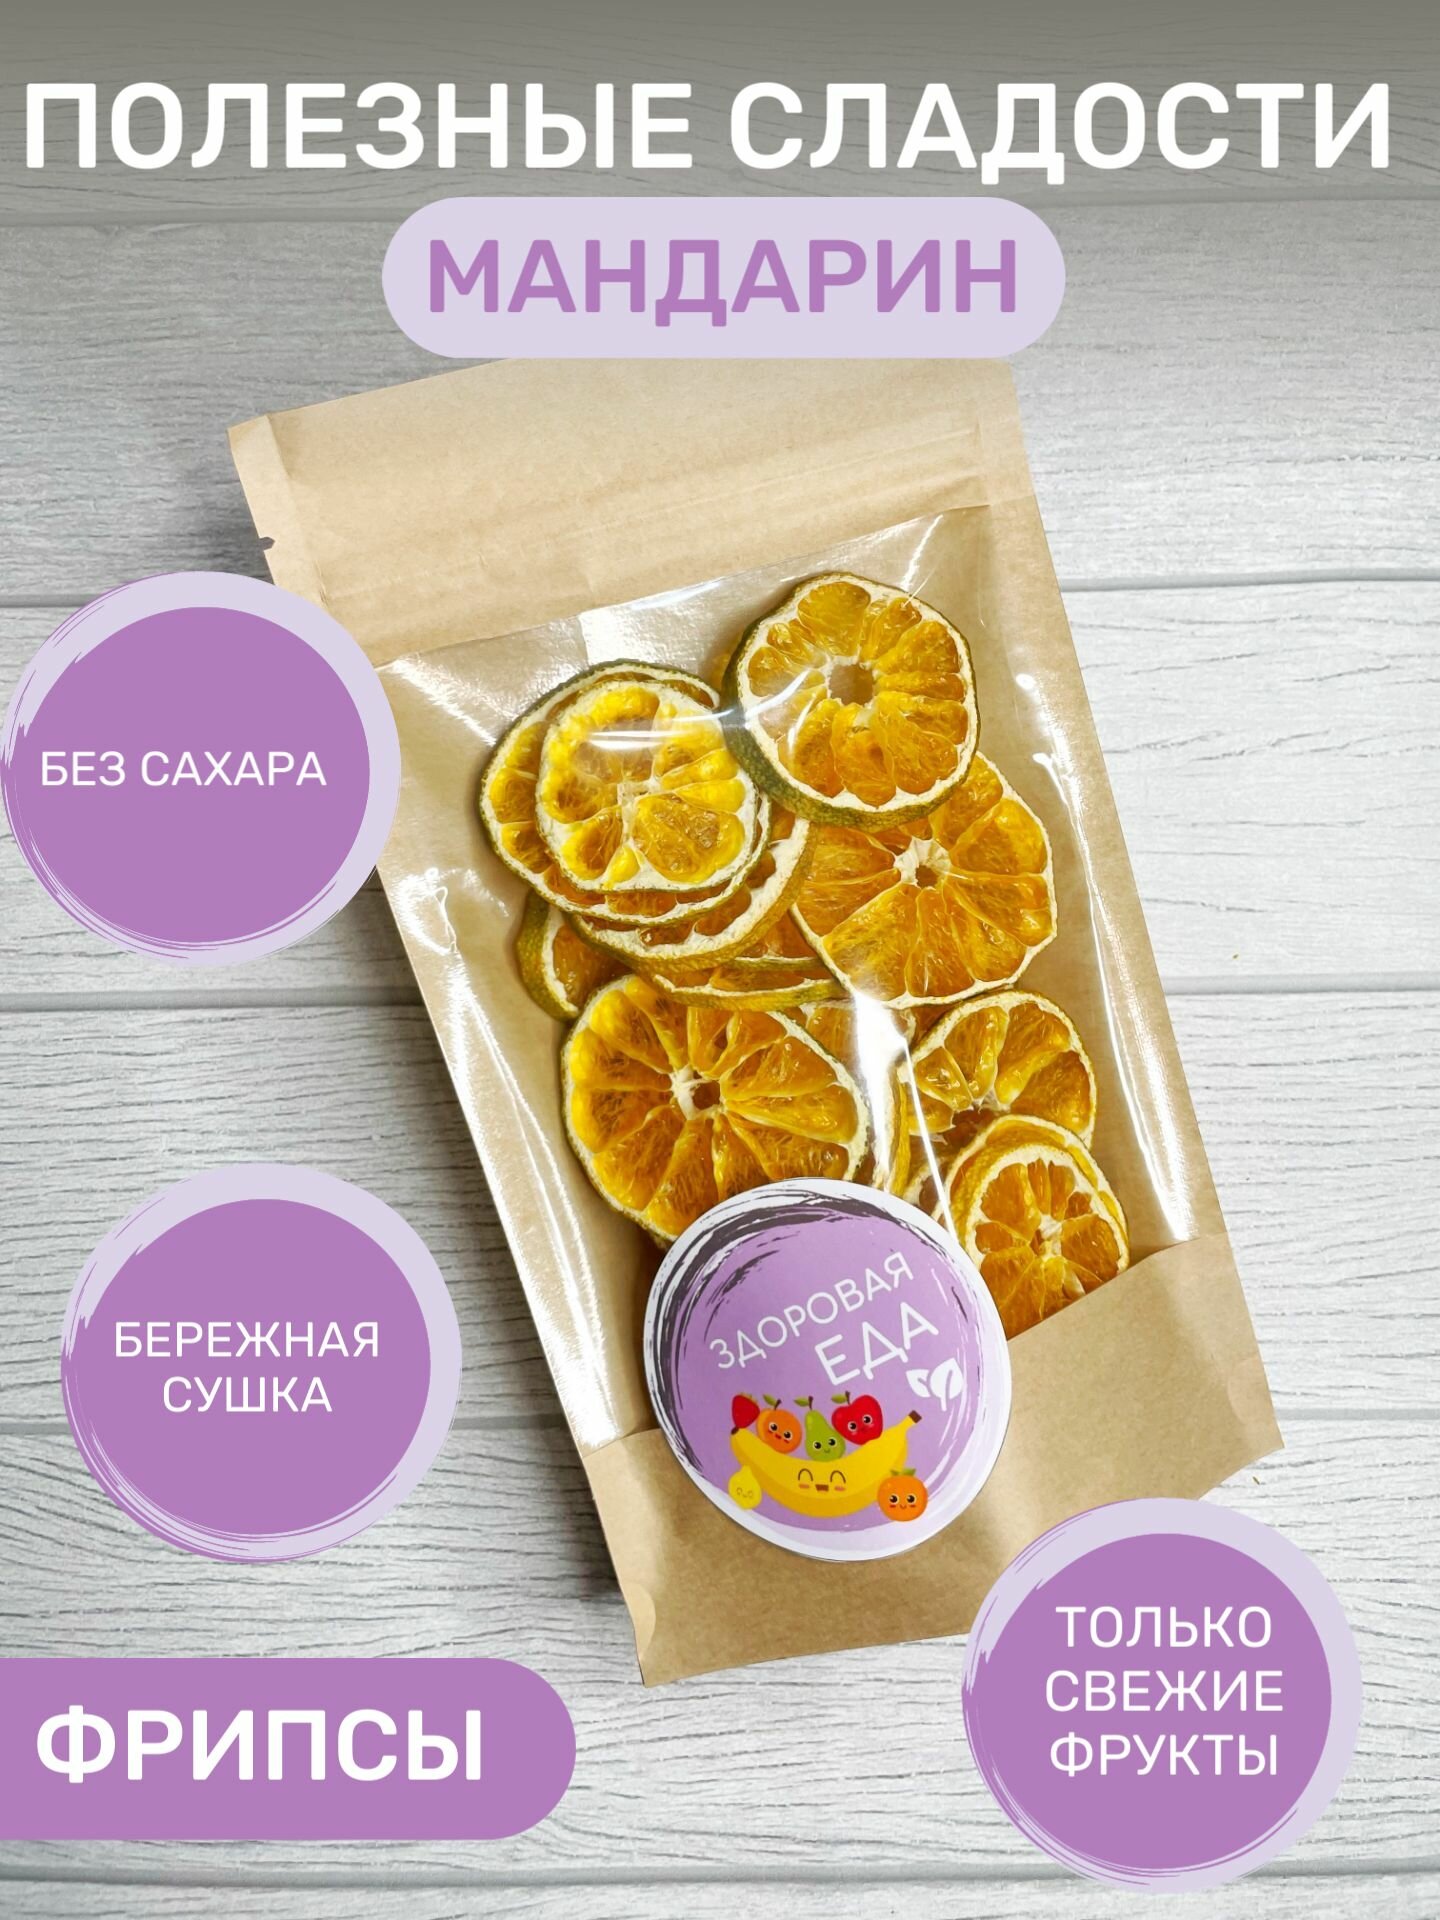 Сушеный мандарин, фруктовые чипсы из мандарина(фрипсы) 65 грамм